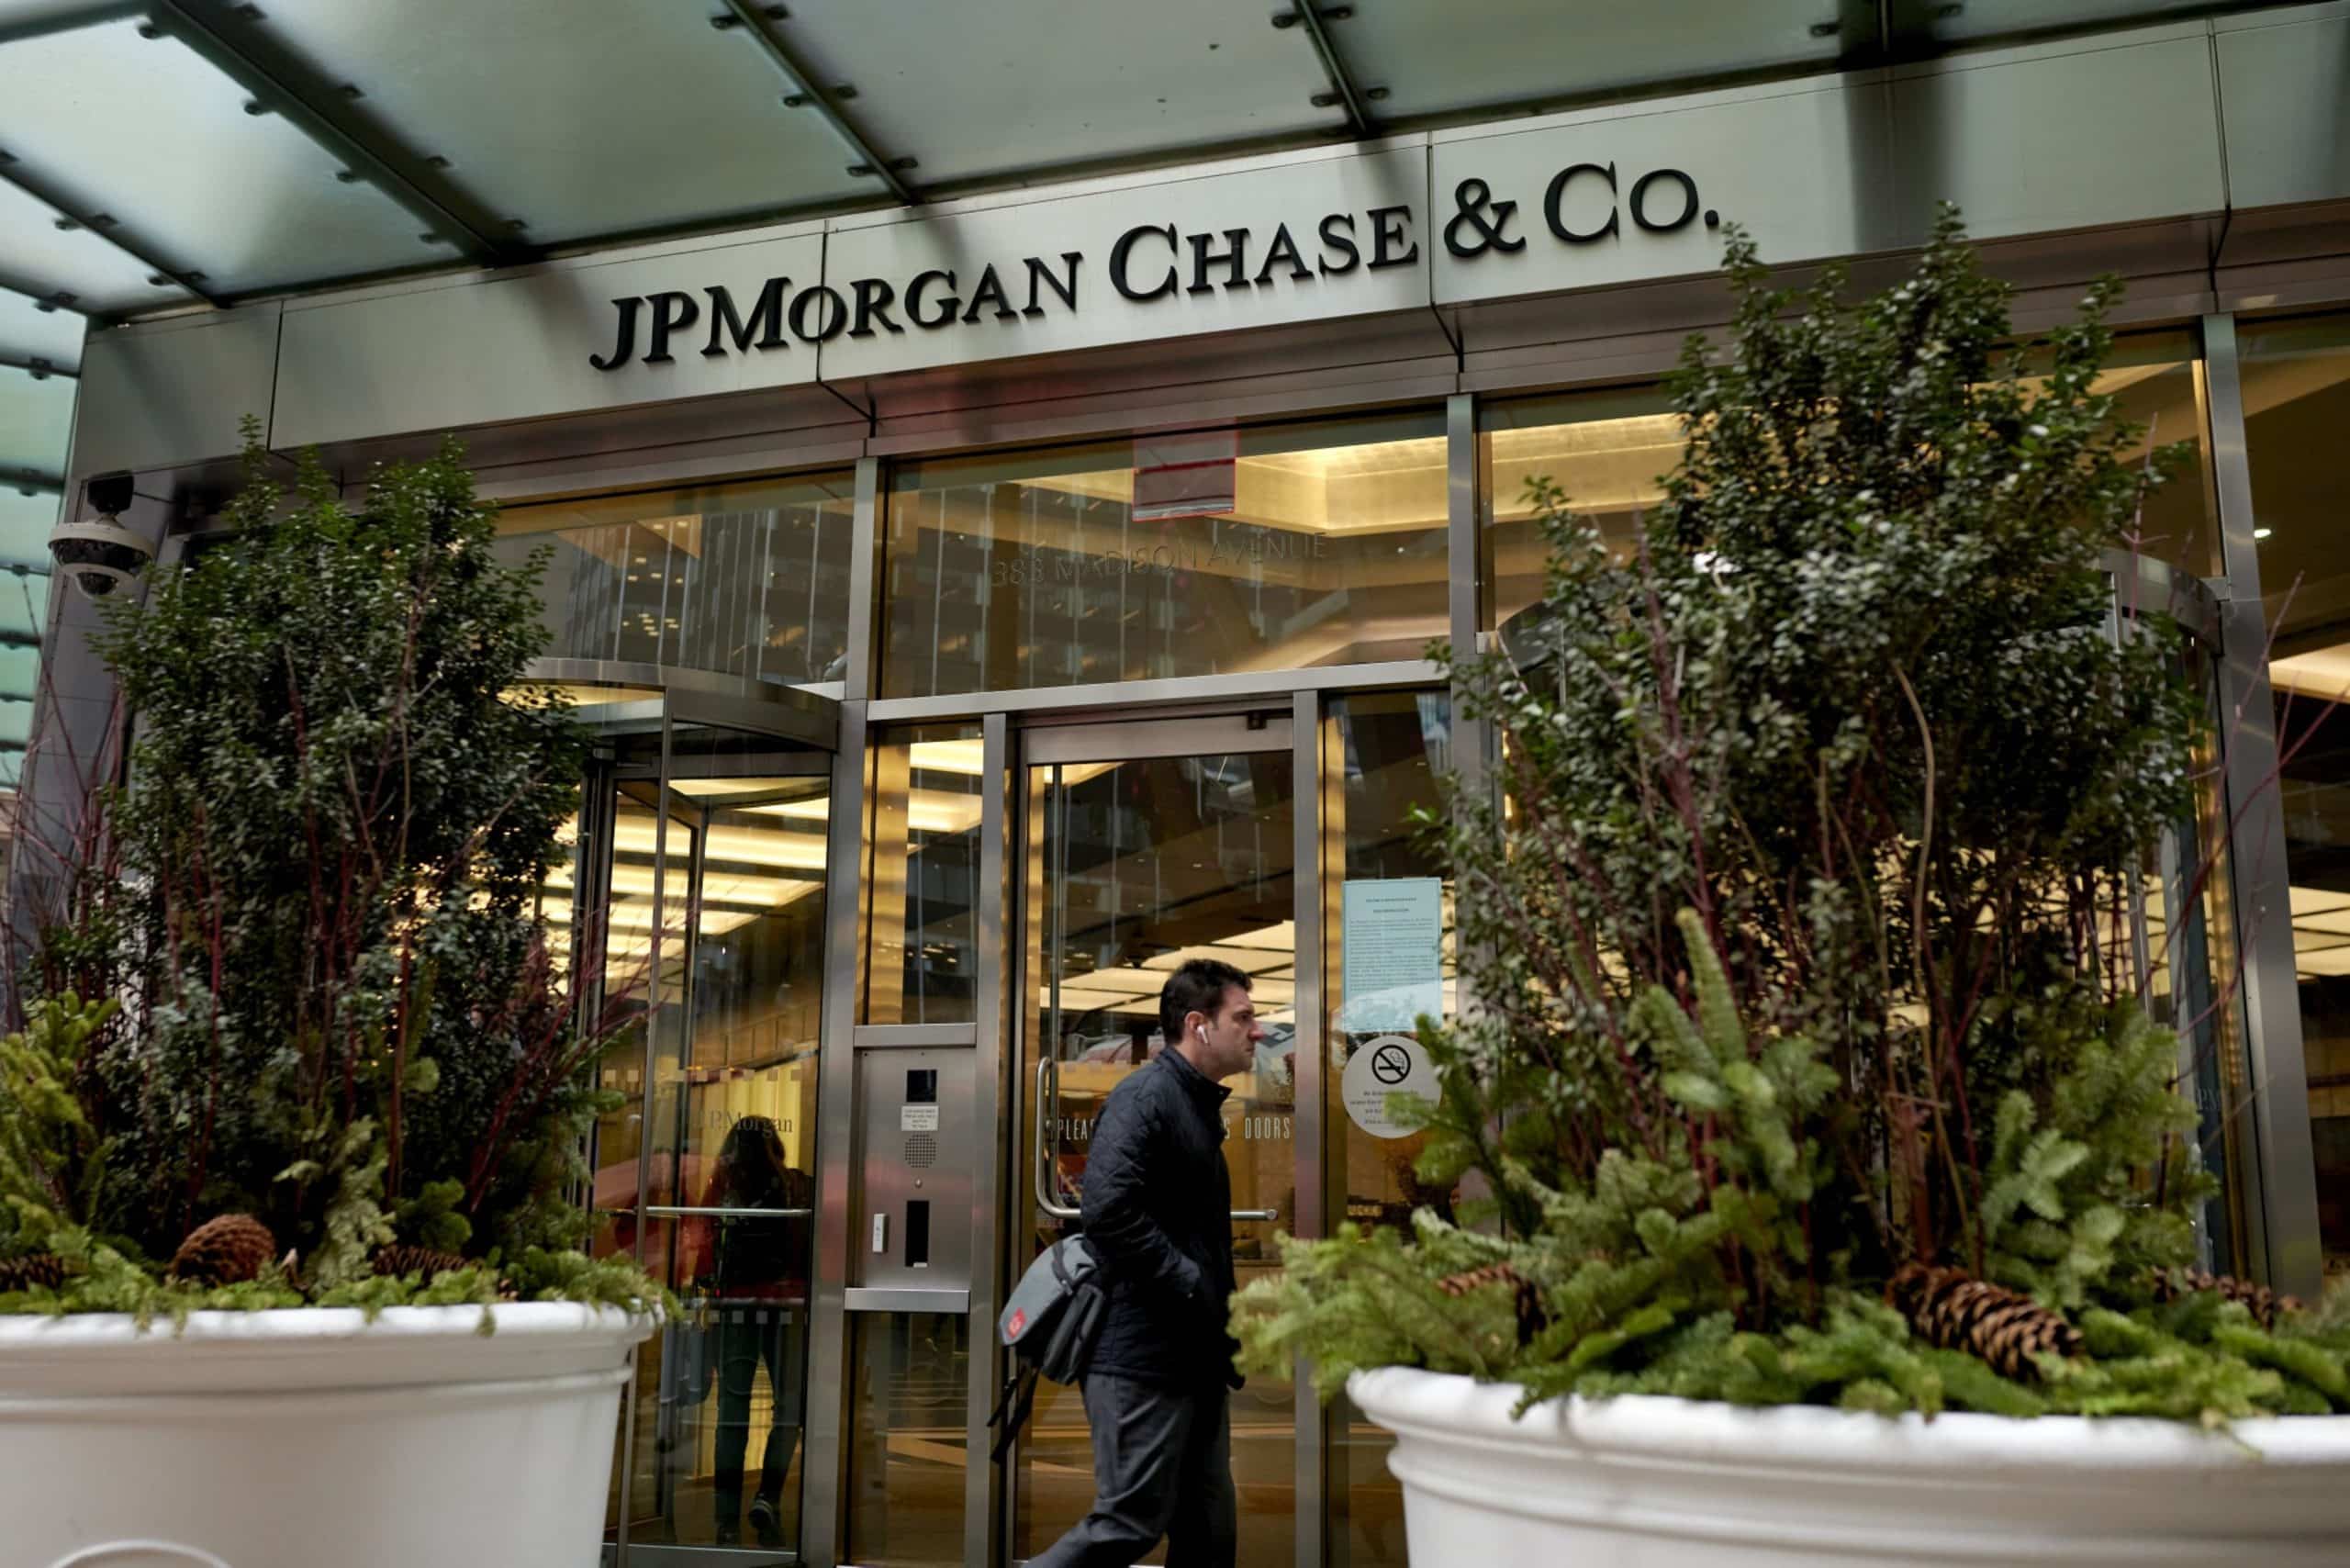 JPMorgan Chase ٹیک اخراجات 7% YoY گر کر $2.1B رہ گئے۔